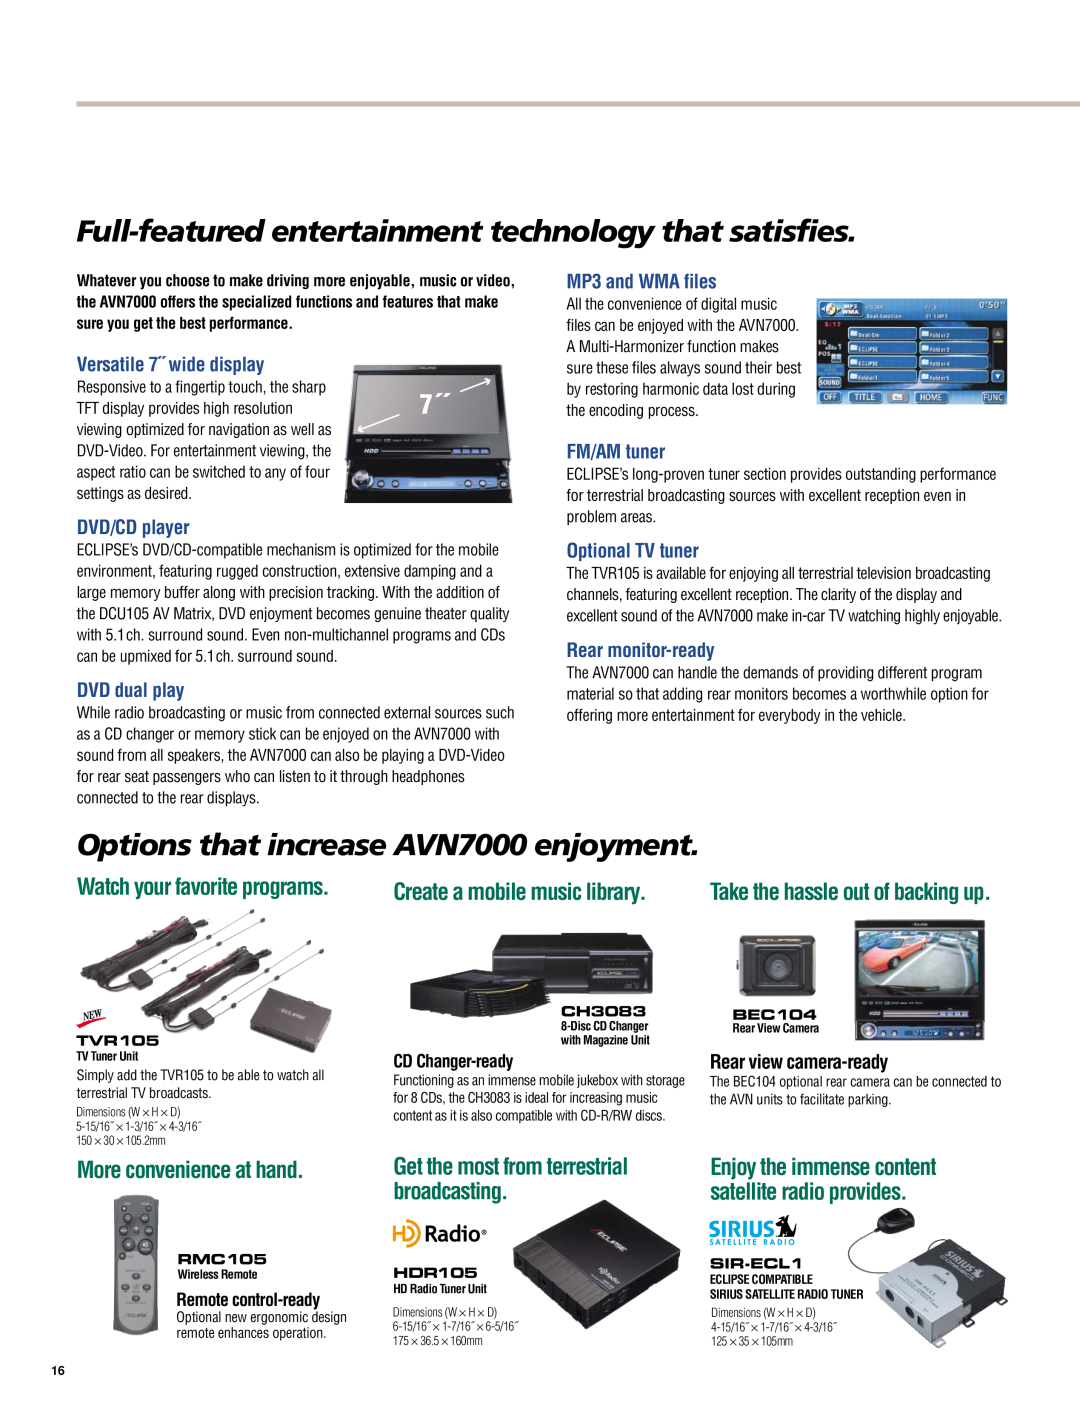 Eclipse - Fujitsu Ten CH3083 manual Versatile 7˝ wide display, DVD/CD player, DVD dual play, MP3 and WMA files, FM/AM tuner 